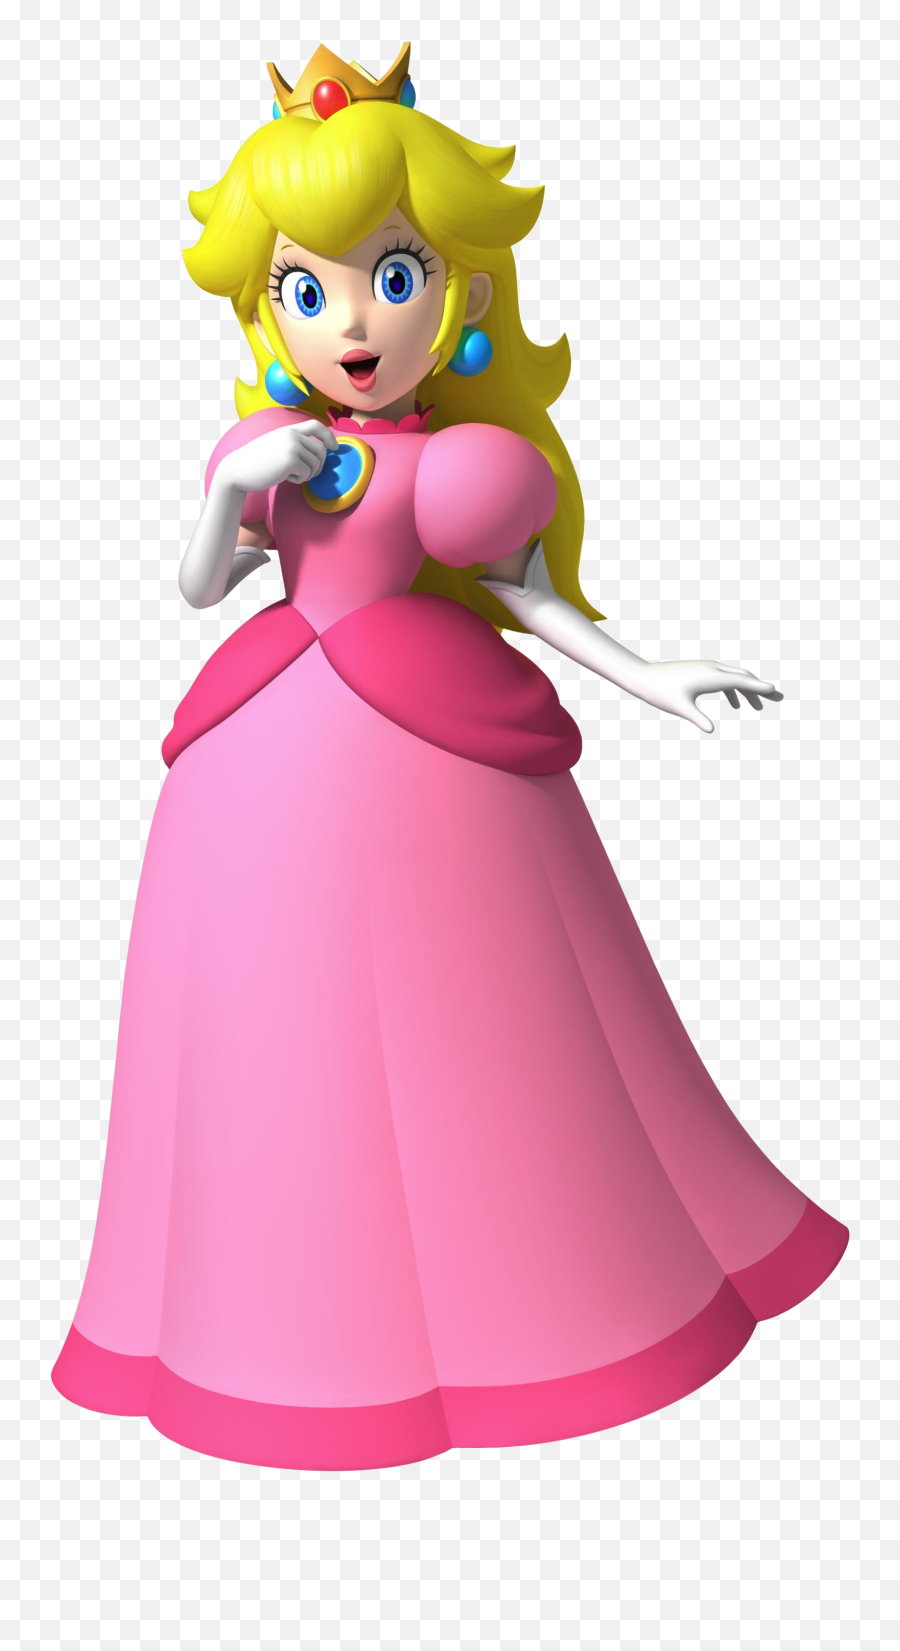 Princess Peach - Princess Peach Wii Emoji,Peach Game Fighting With Emotions